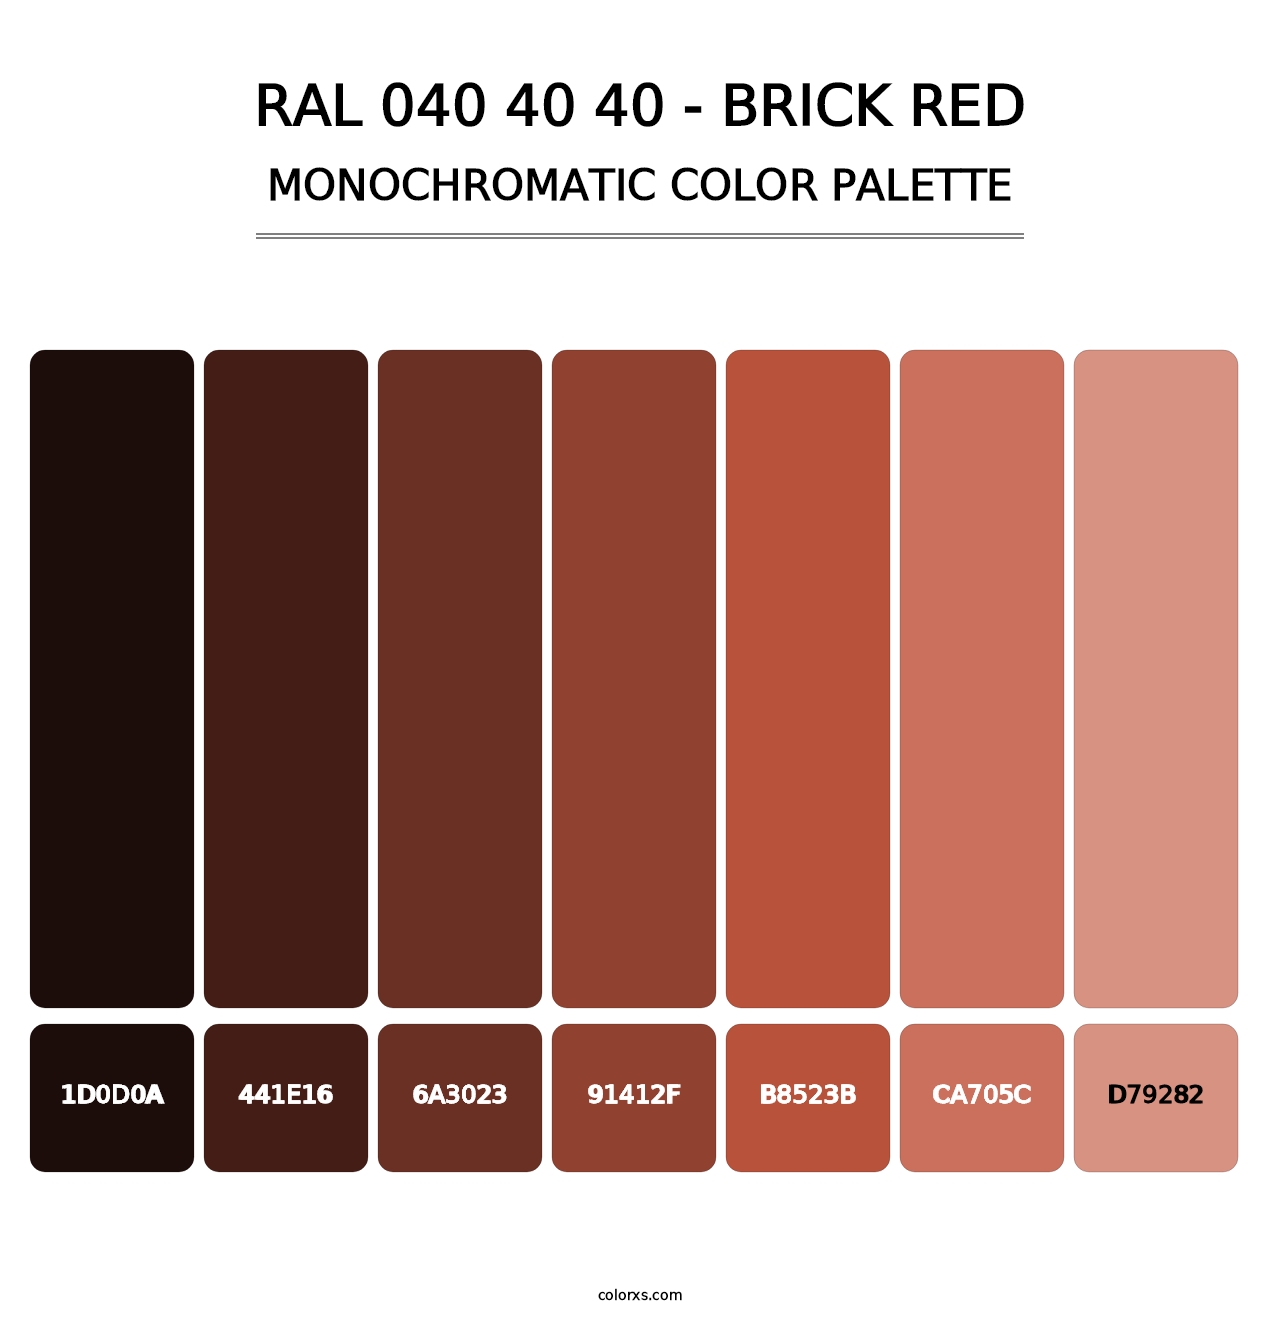 RAL 040 40 40 - Brick Red - Monochromatic Color Palette